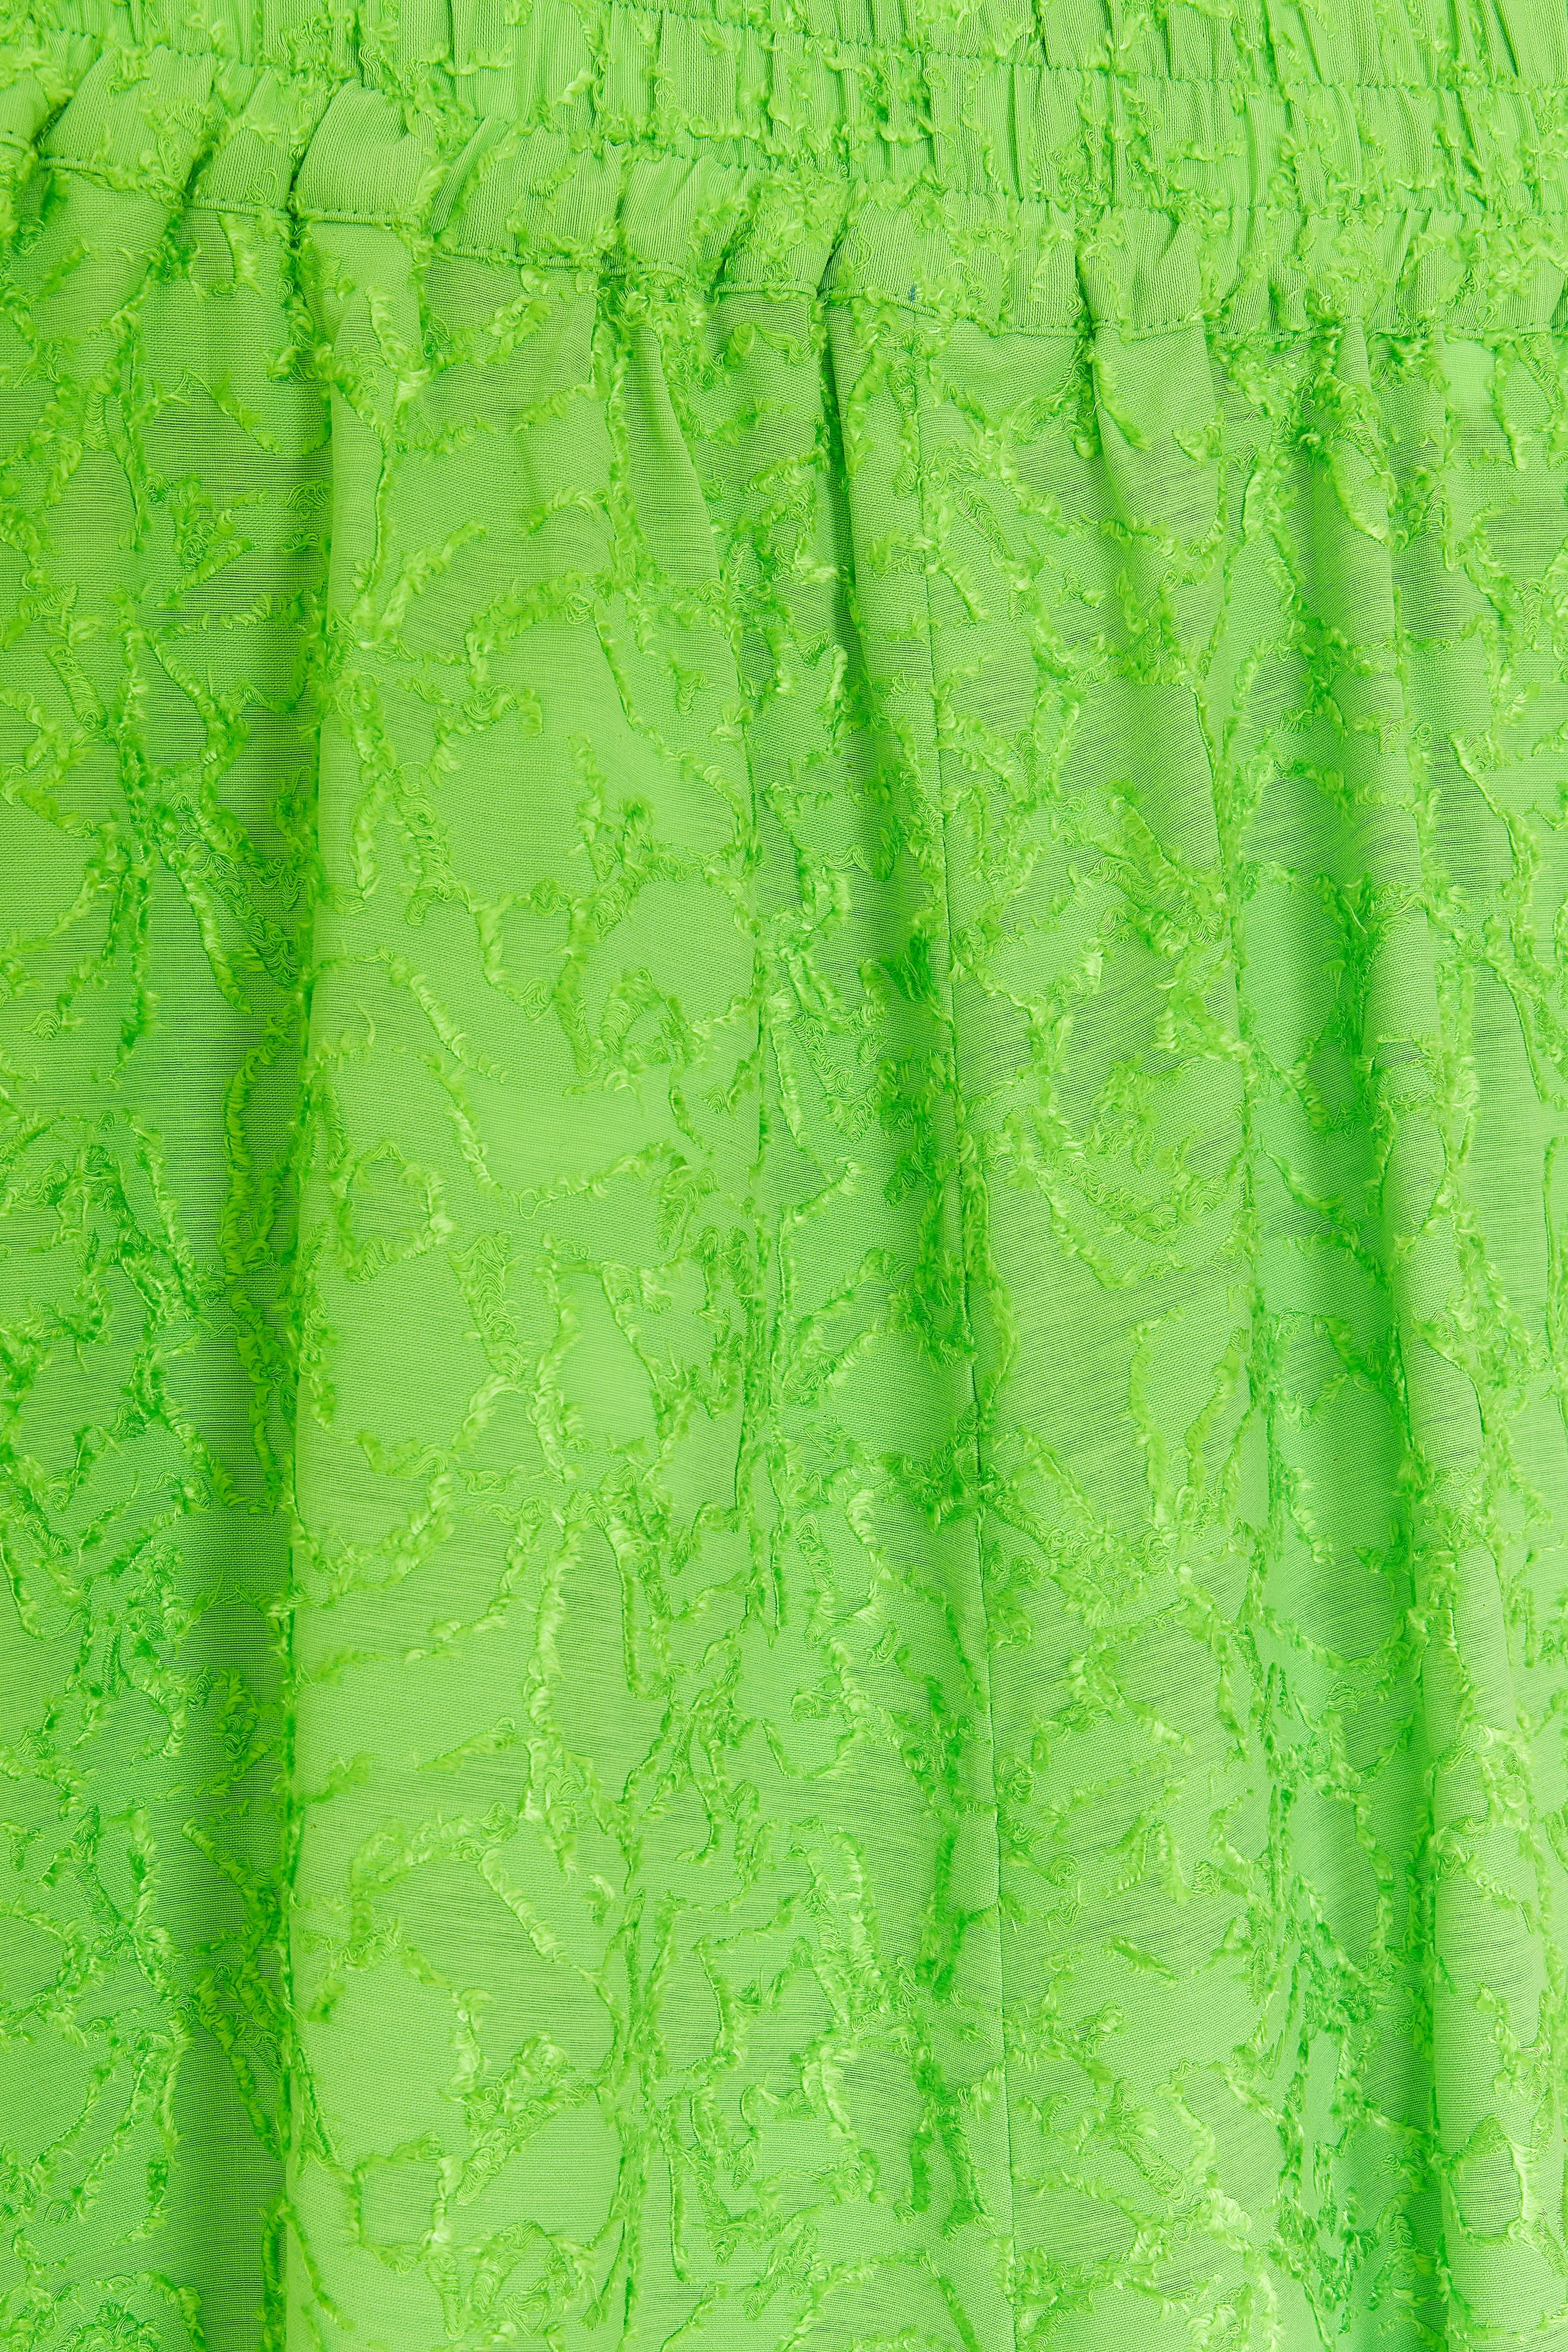 CKS Dames - VALENCINE - midi skirt - bright green